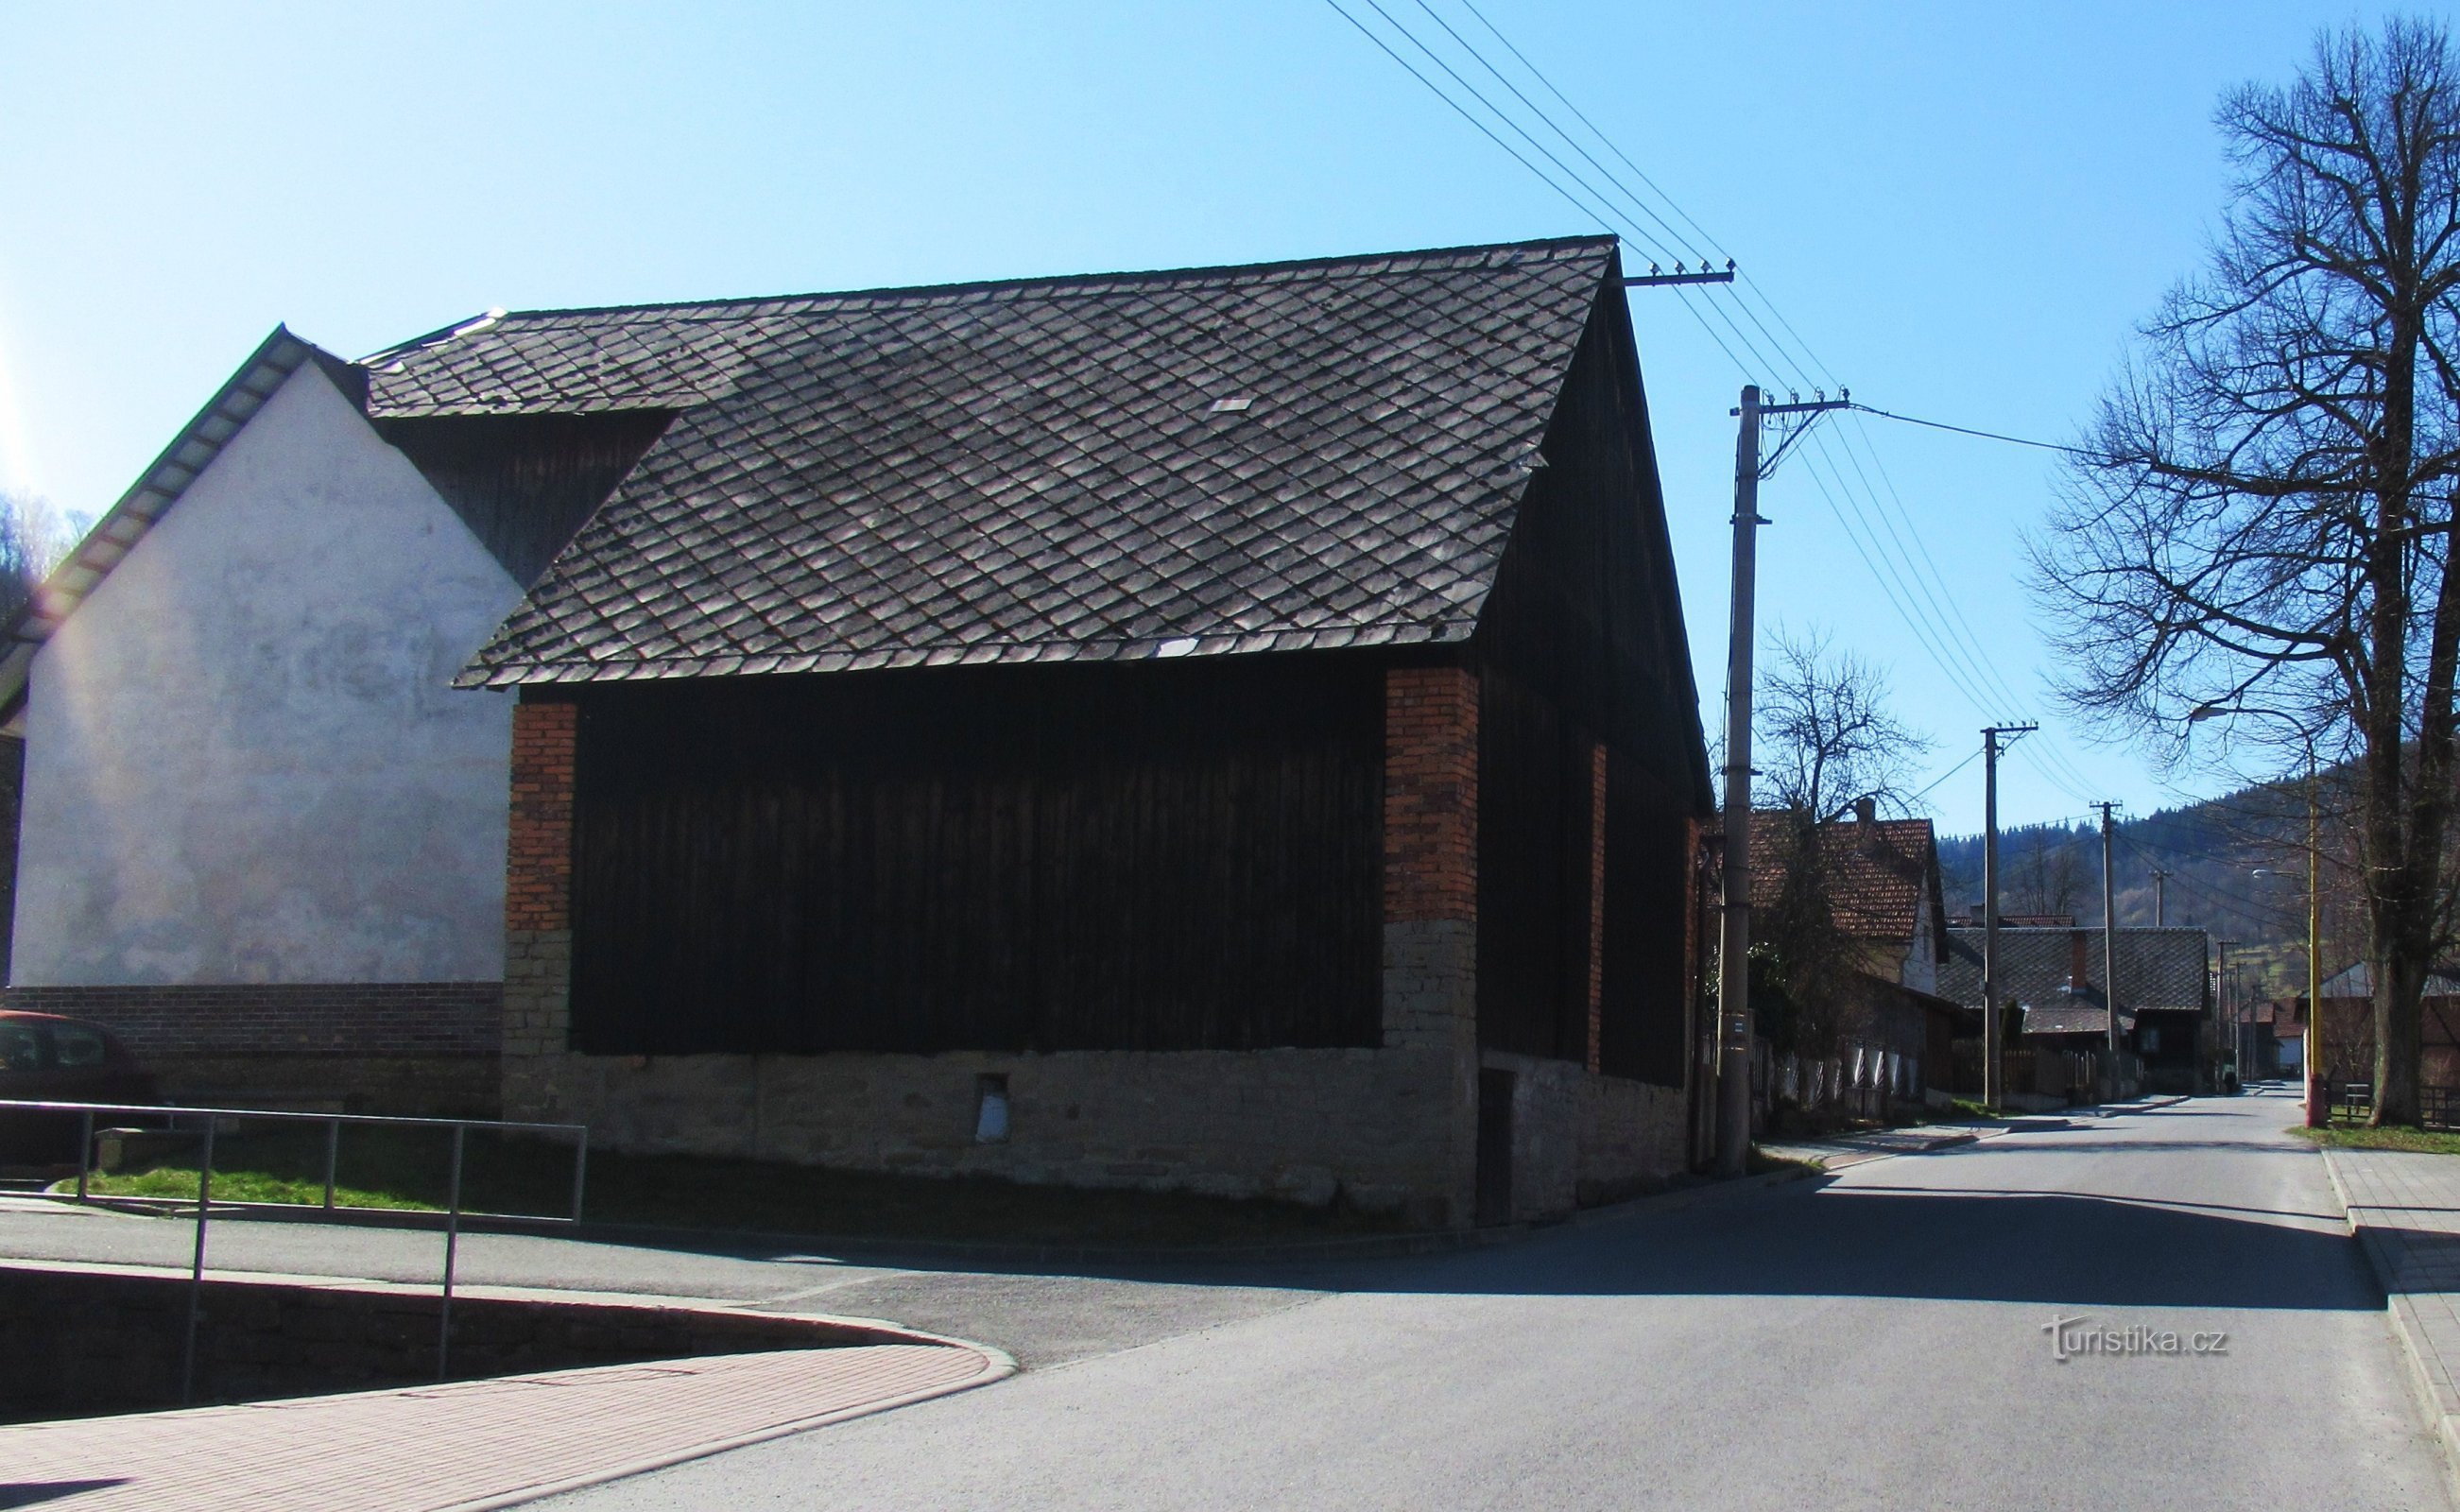 The village of Zděchov in Wallachia